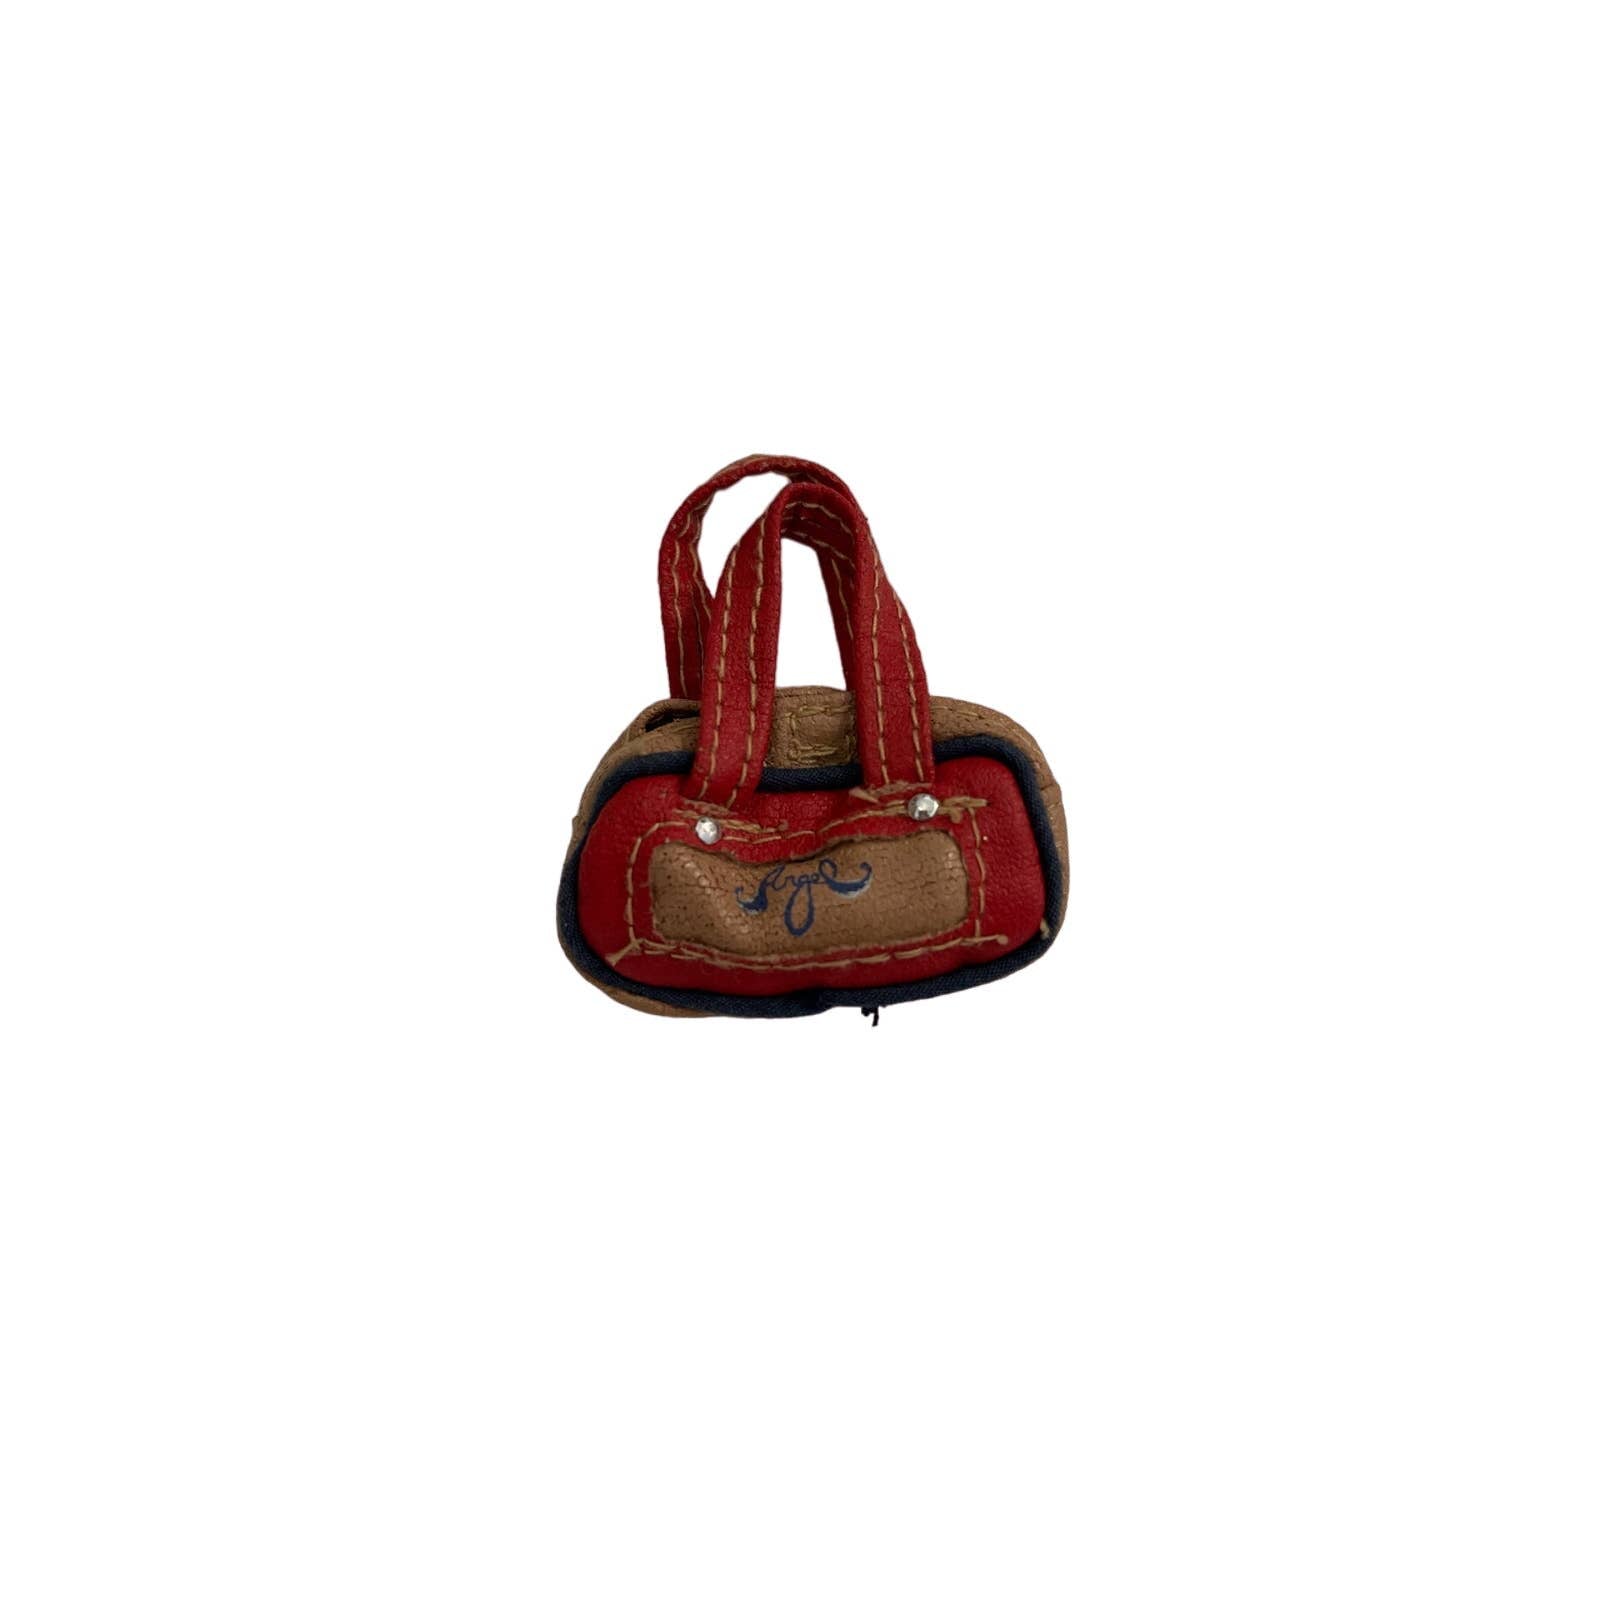 Bratz Girlz Girl Doll (Xpress It Cloe) Angel Bag Purse Handbag Red & Tan